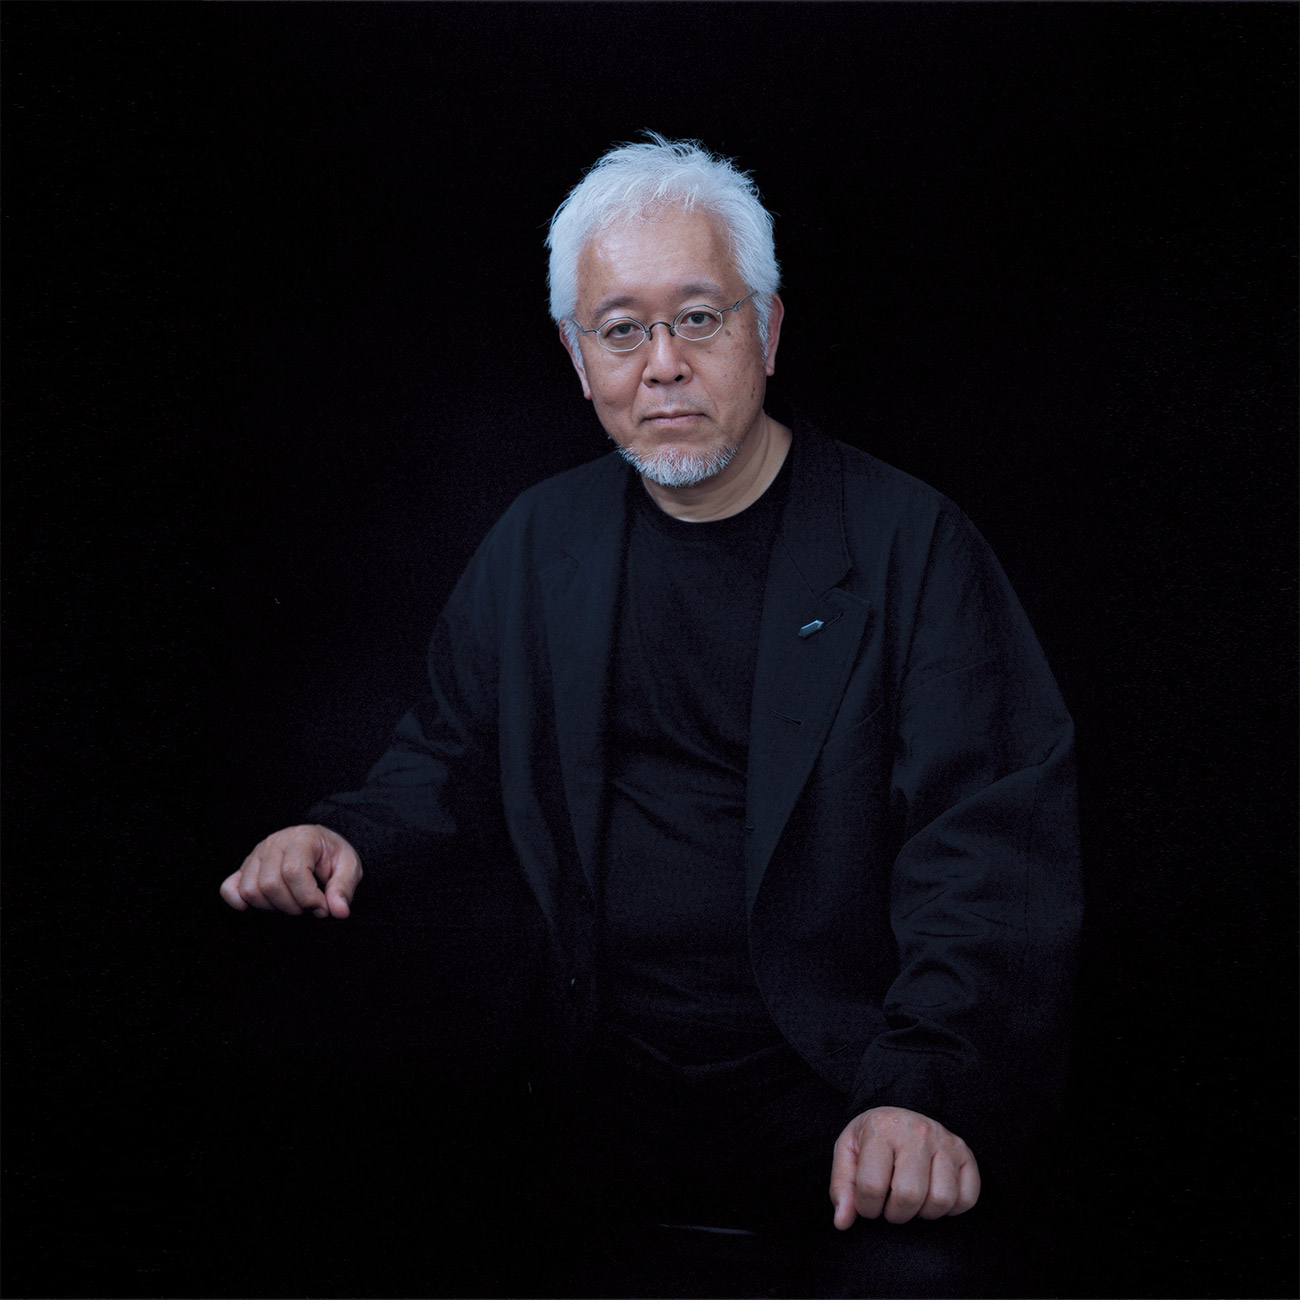 MUJI Art Director Kenya Hara. Image by Yoshihiko Ueda